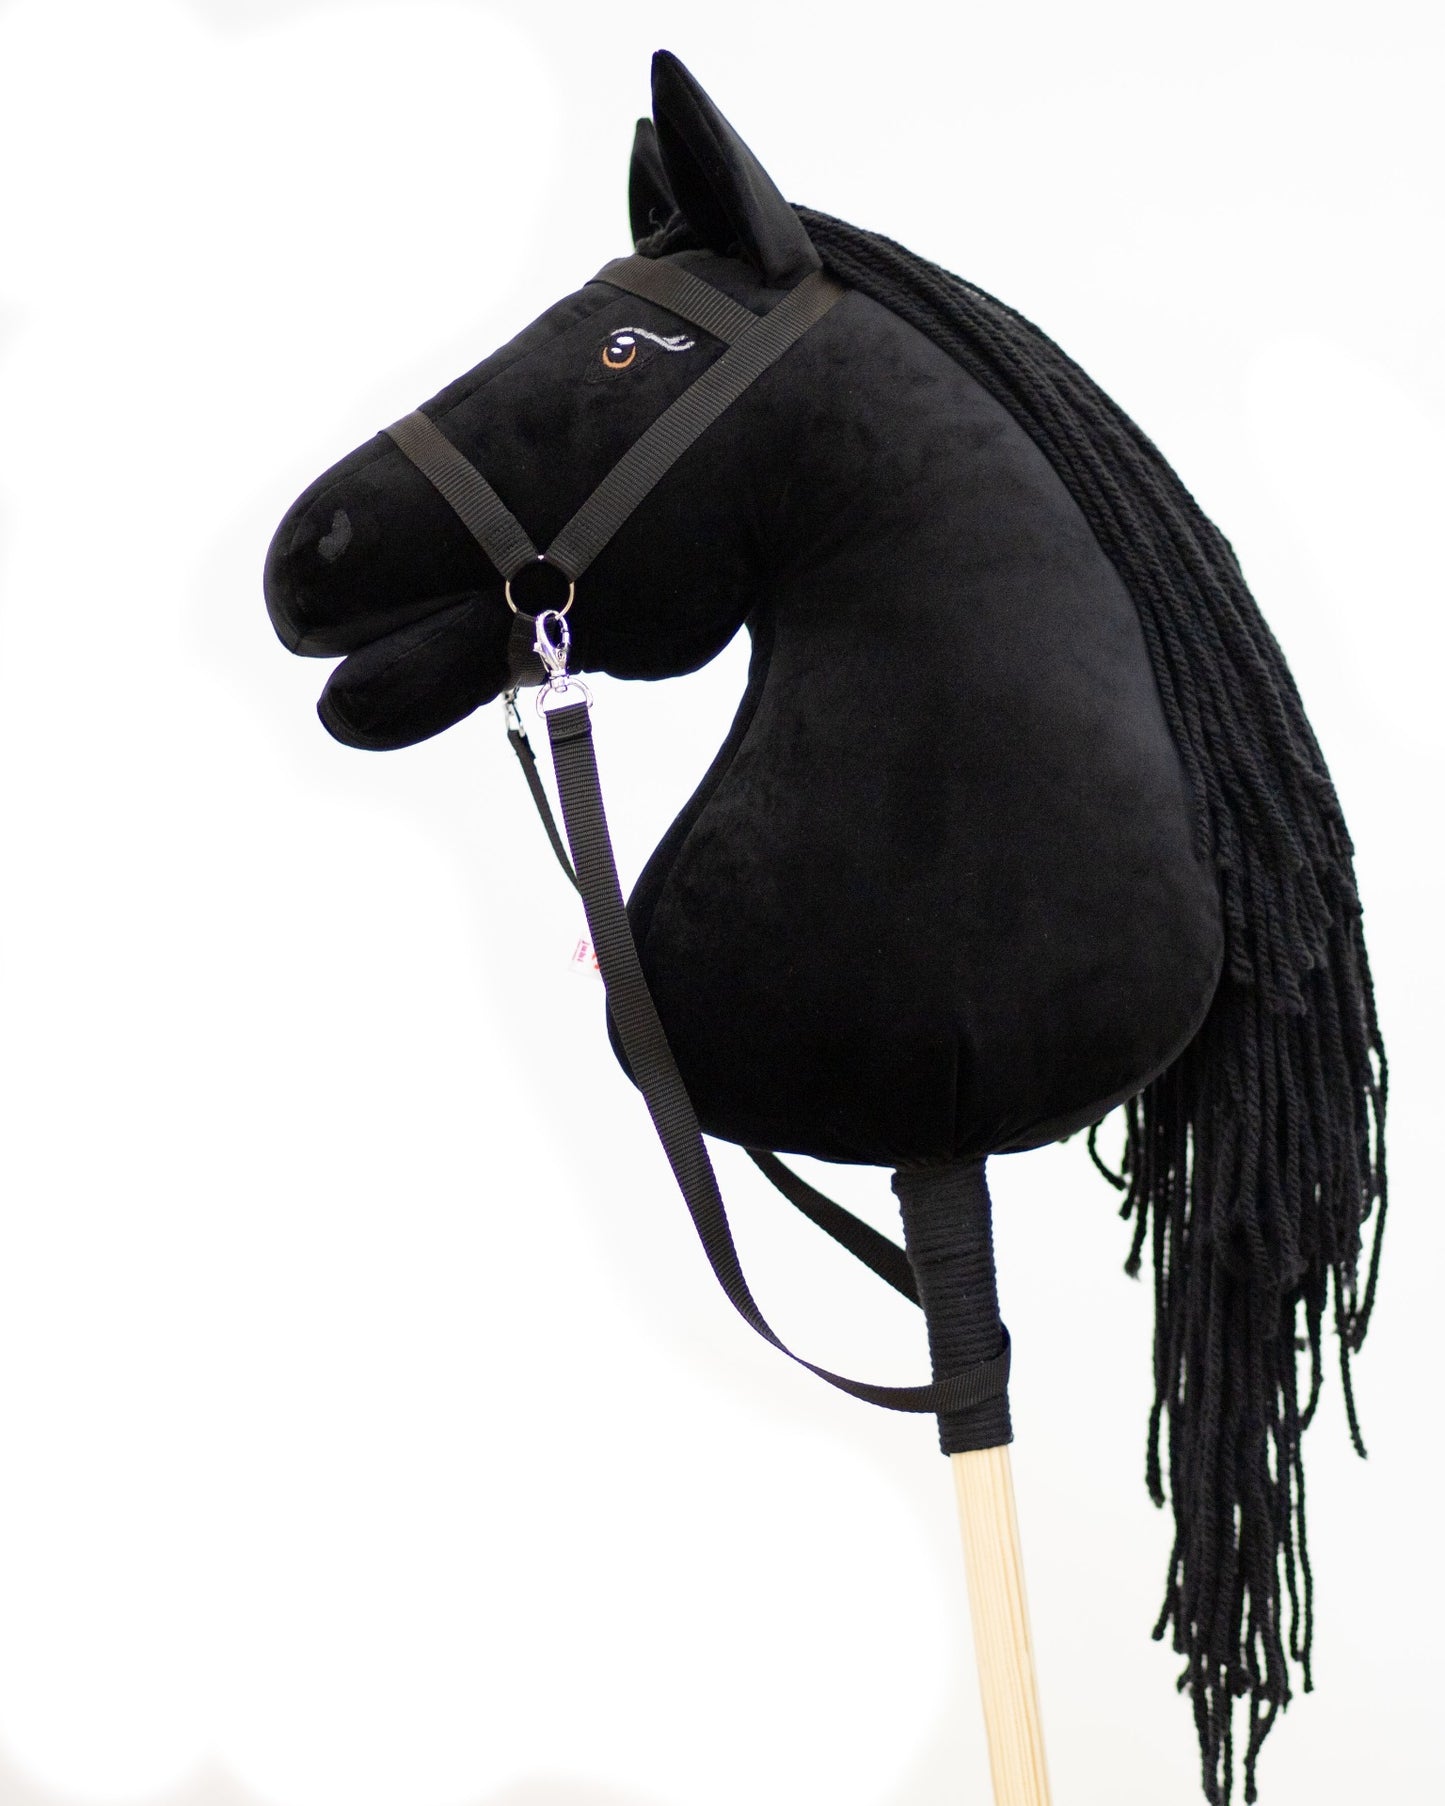 Black Moon - Black mane - Adult horse